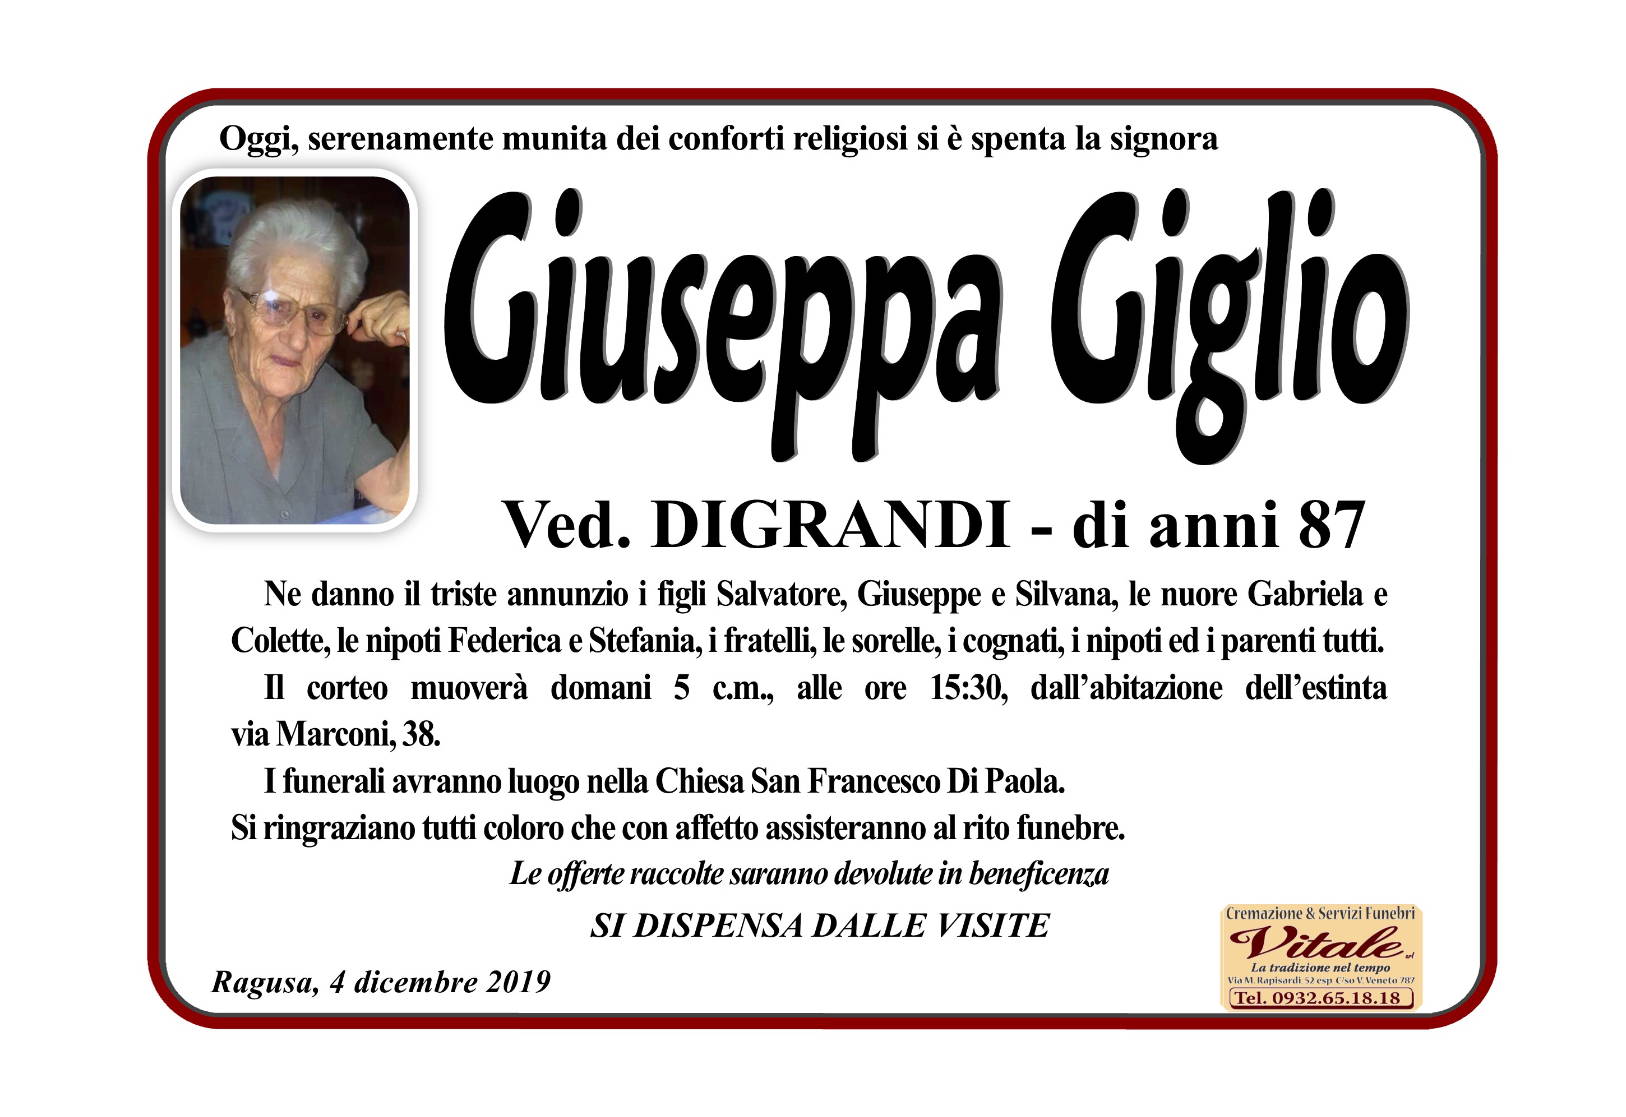 Giuseppa Giglio